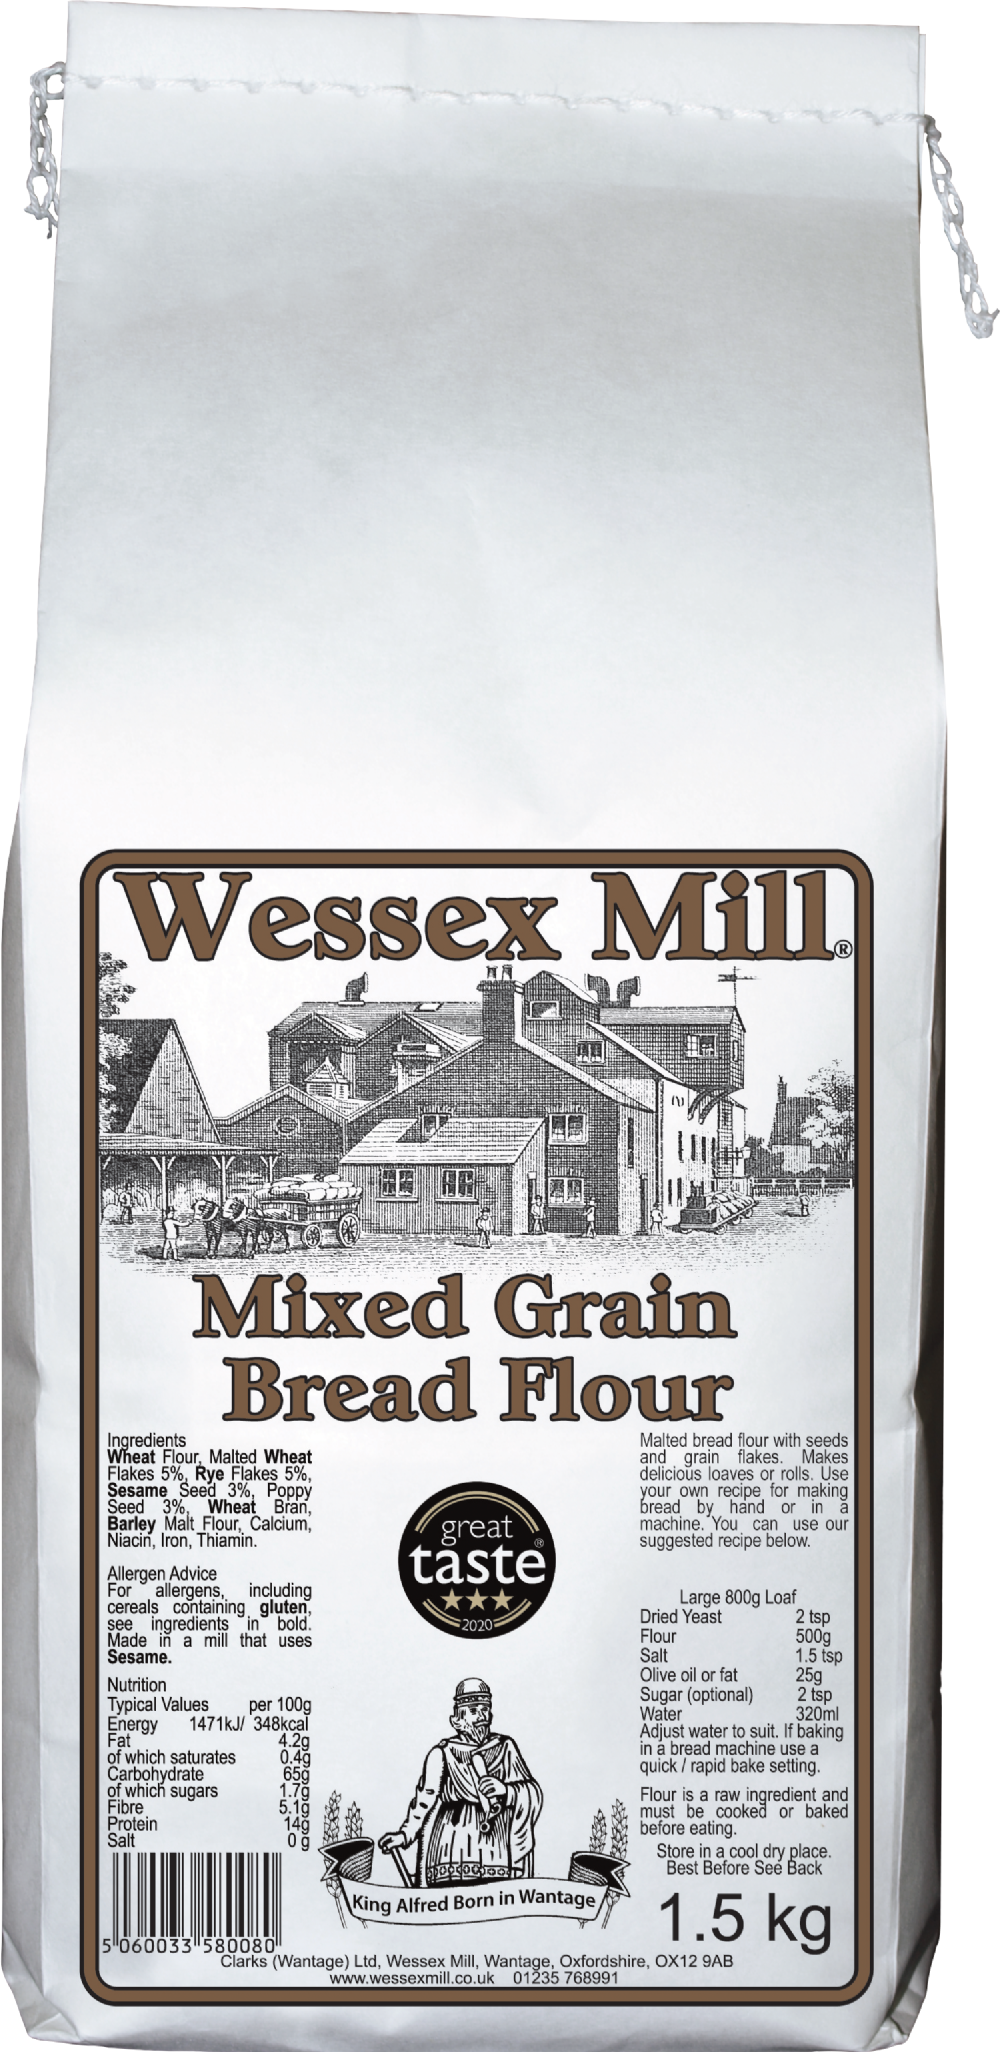 WESSEX MILL Mixed Grain Bread Flour 1.5kg